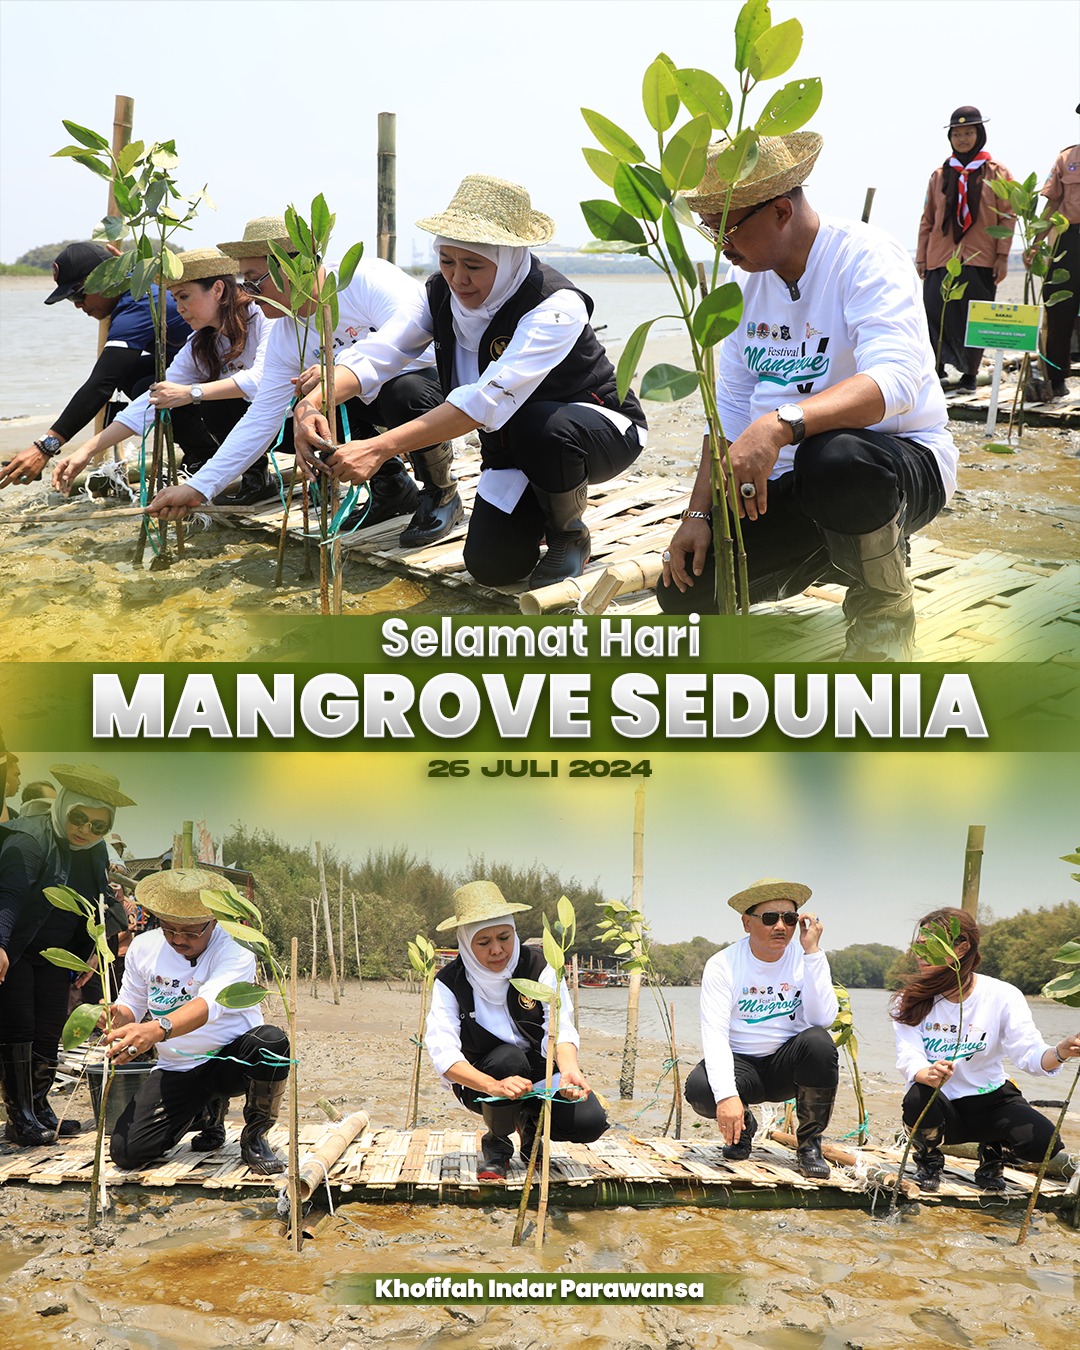 Peringati Hari Mangrove Sedunia, Khofifah Ajak Masyarakat Melakukan Aksi Nyata Pelestarian Mangrove, Lindungi Ekosistem Pesisir